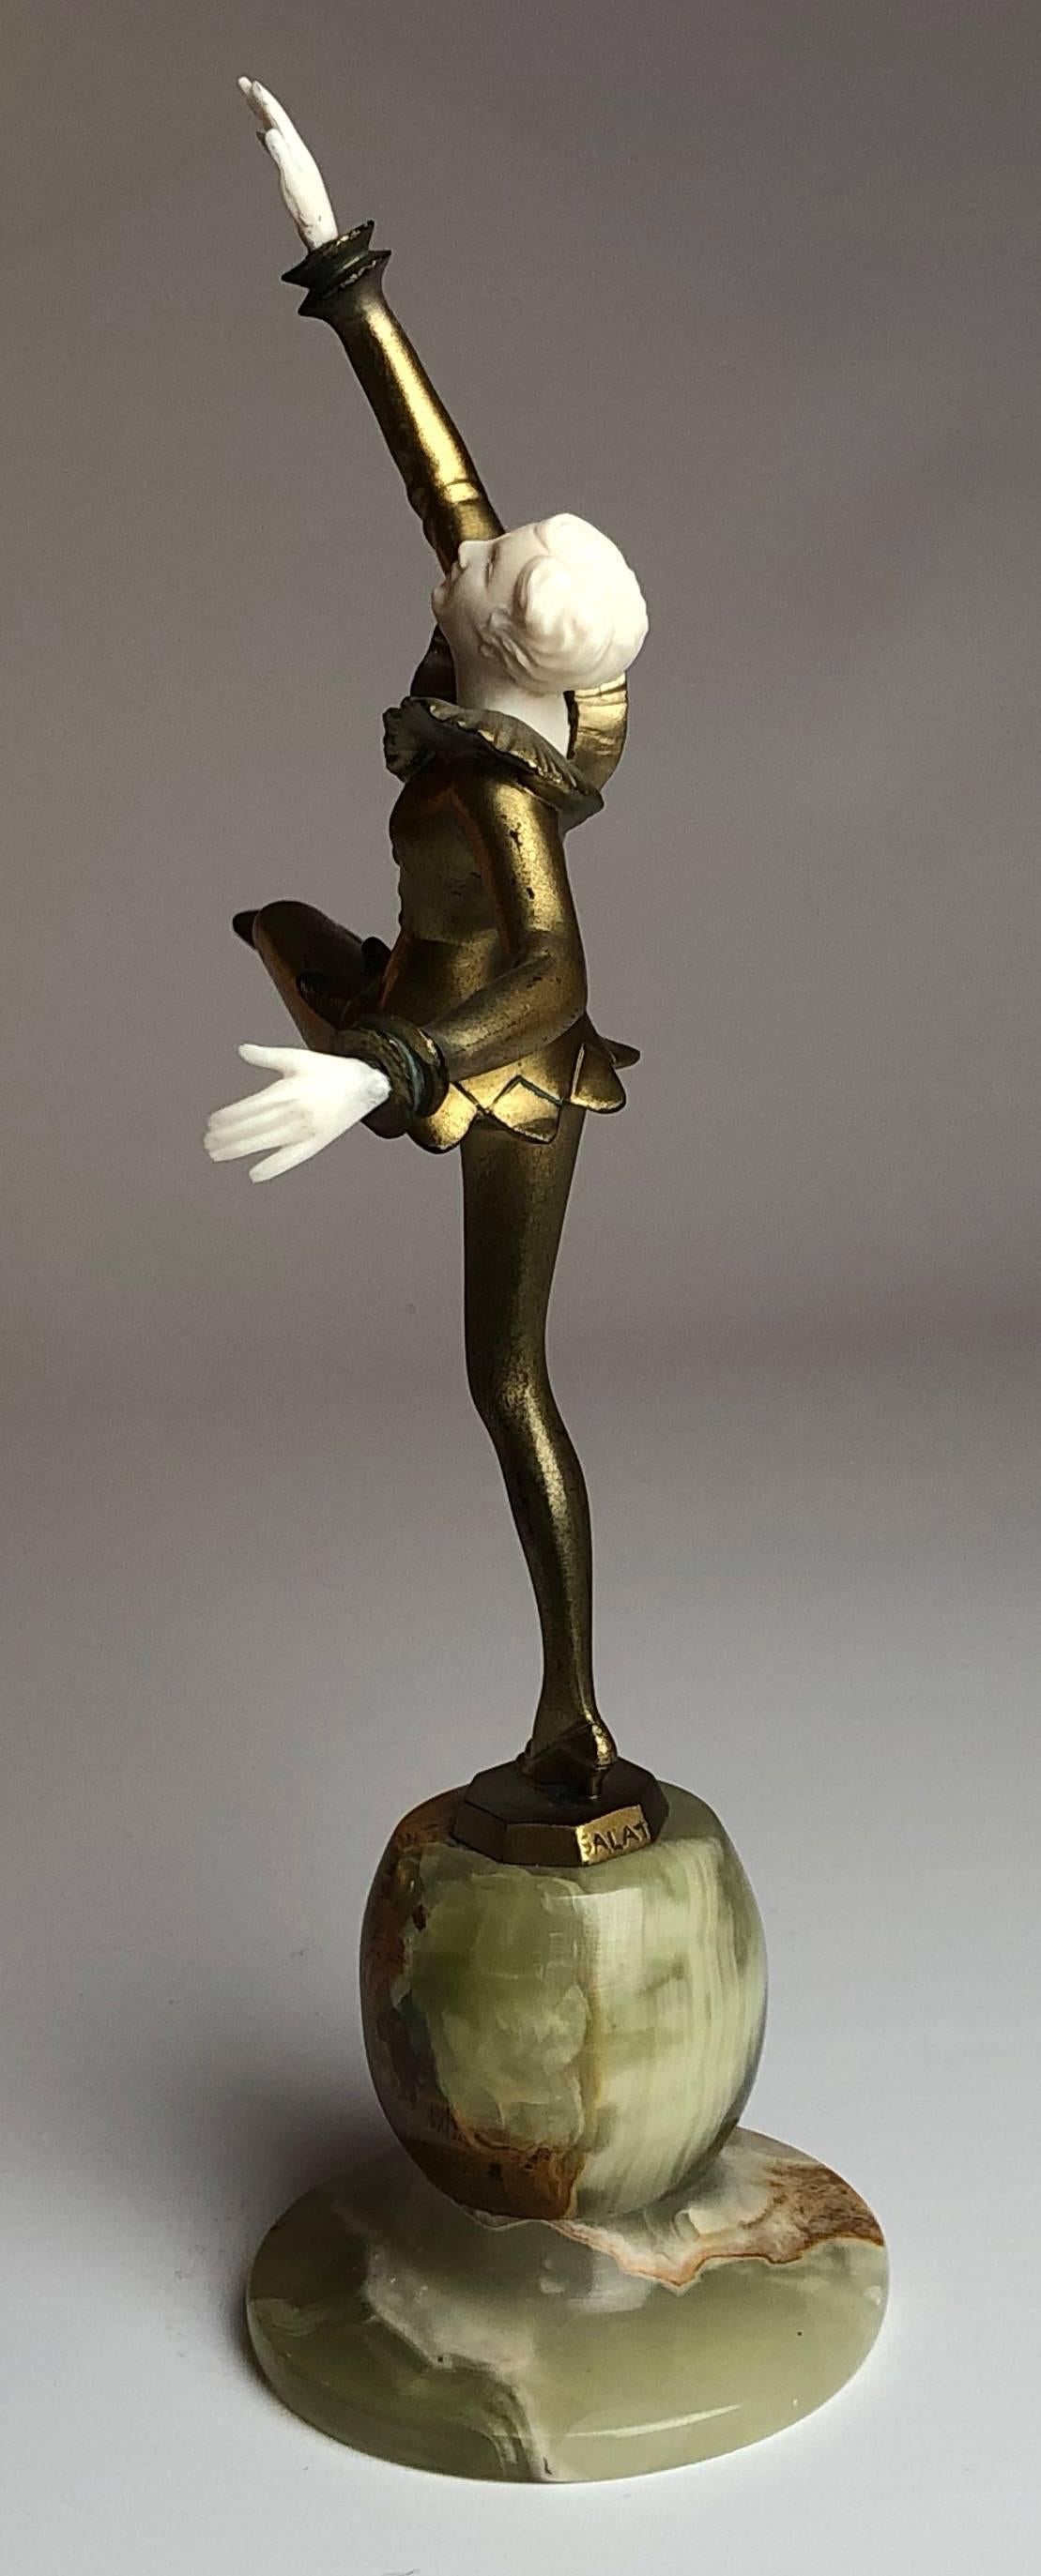 A good Art Deco figure by Leon Salat.

She stands 10